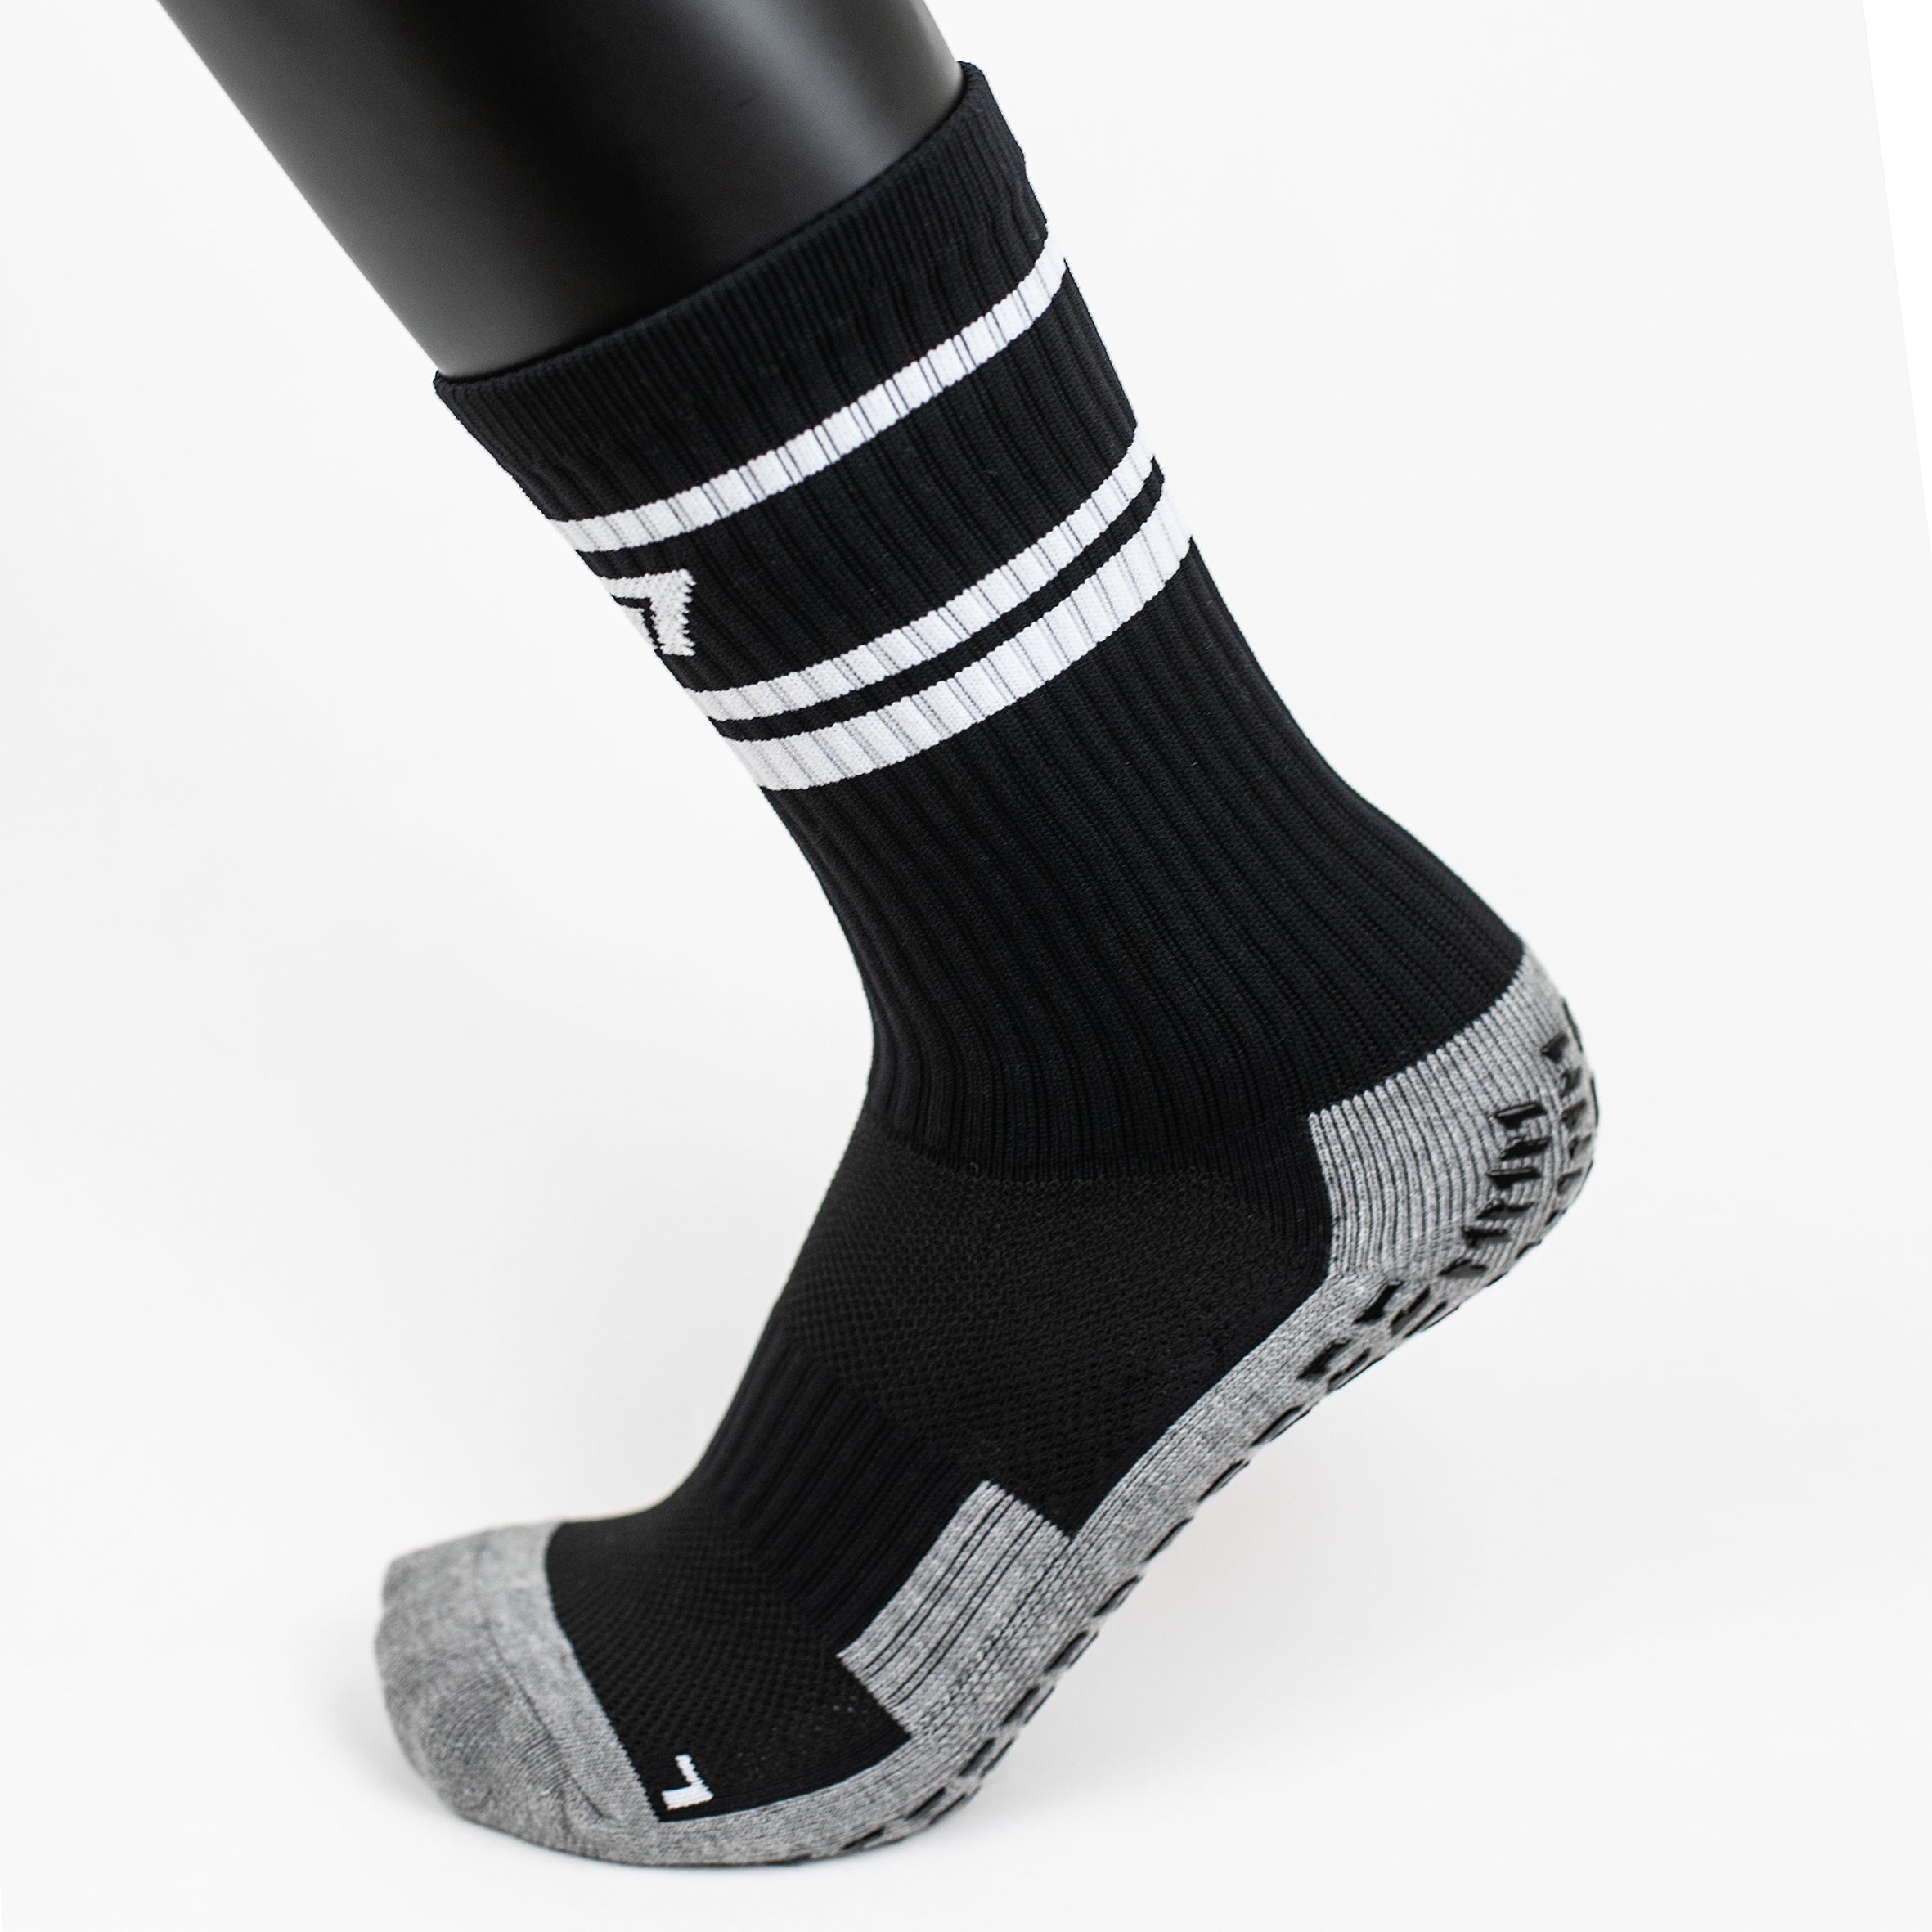 High Performance Sport Socks "Hyper Grip"